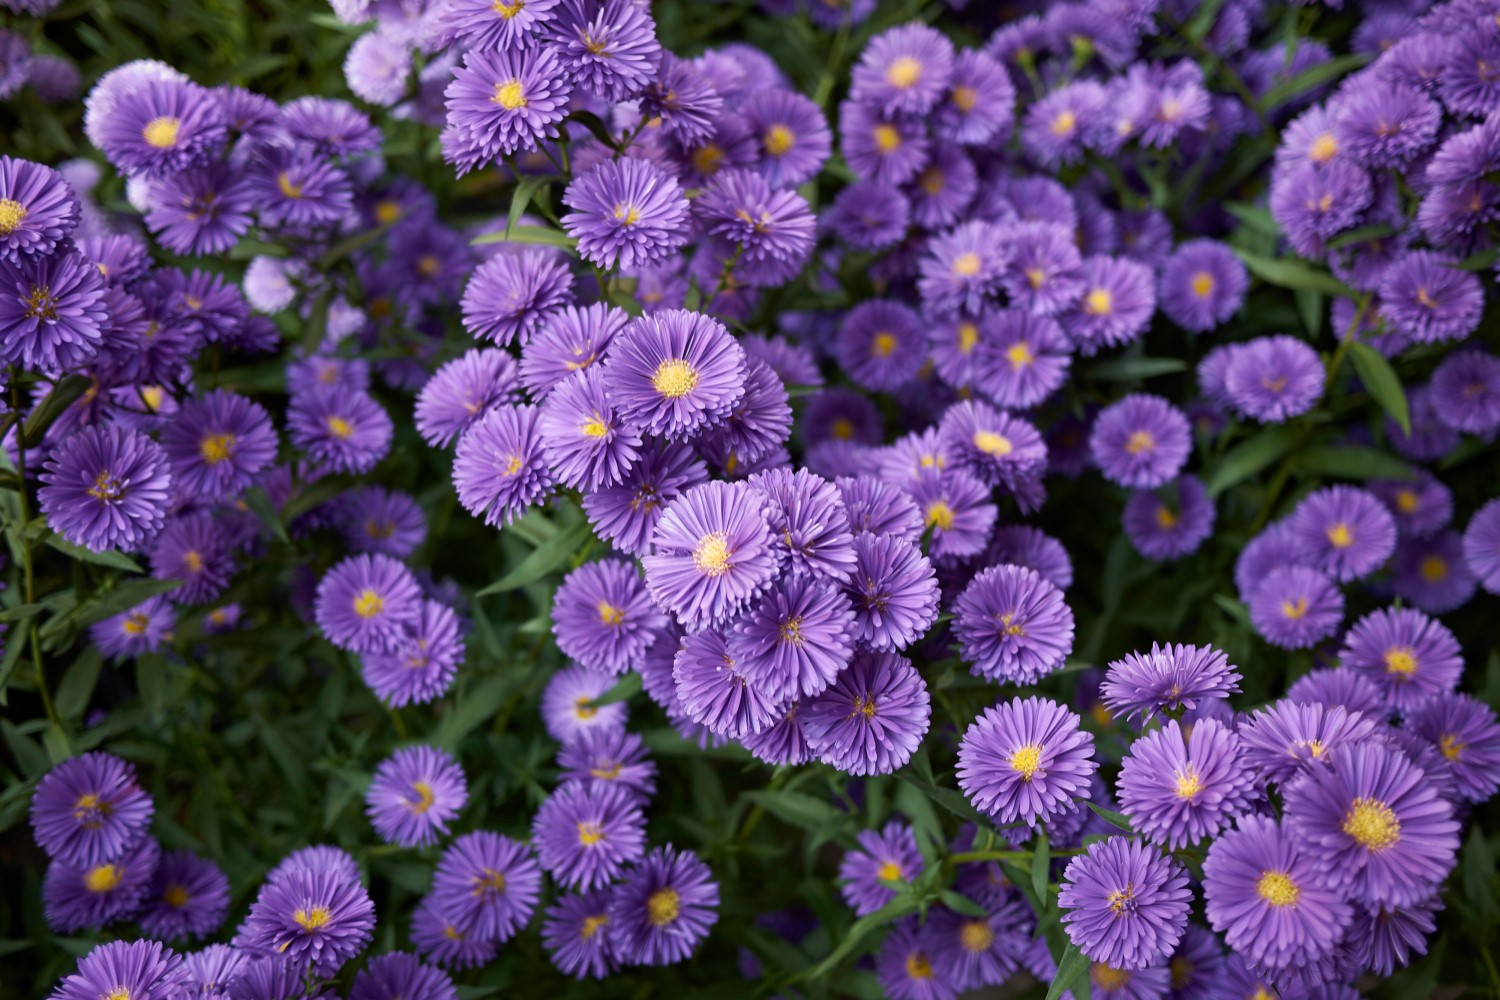 Soft looking purple aster flowers